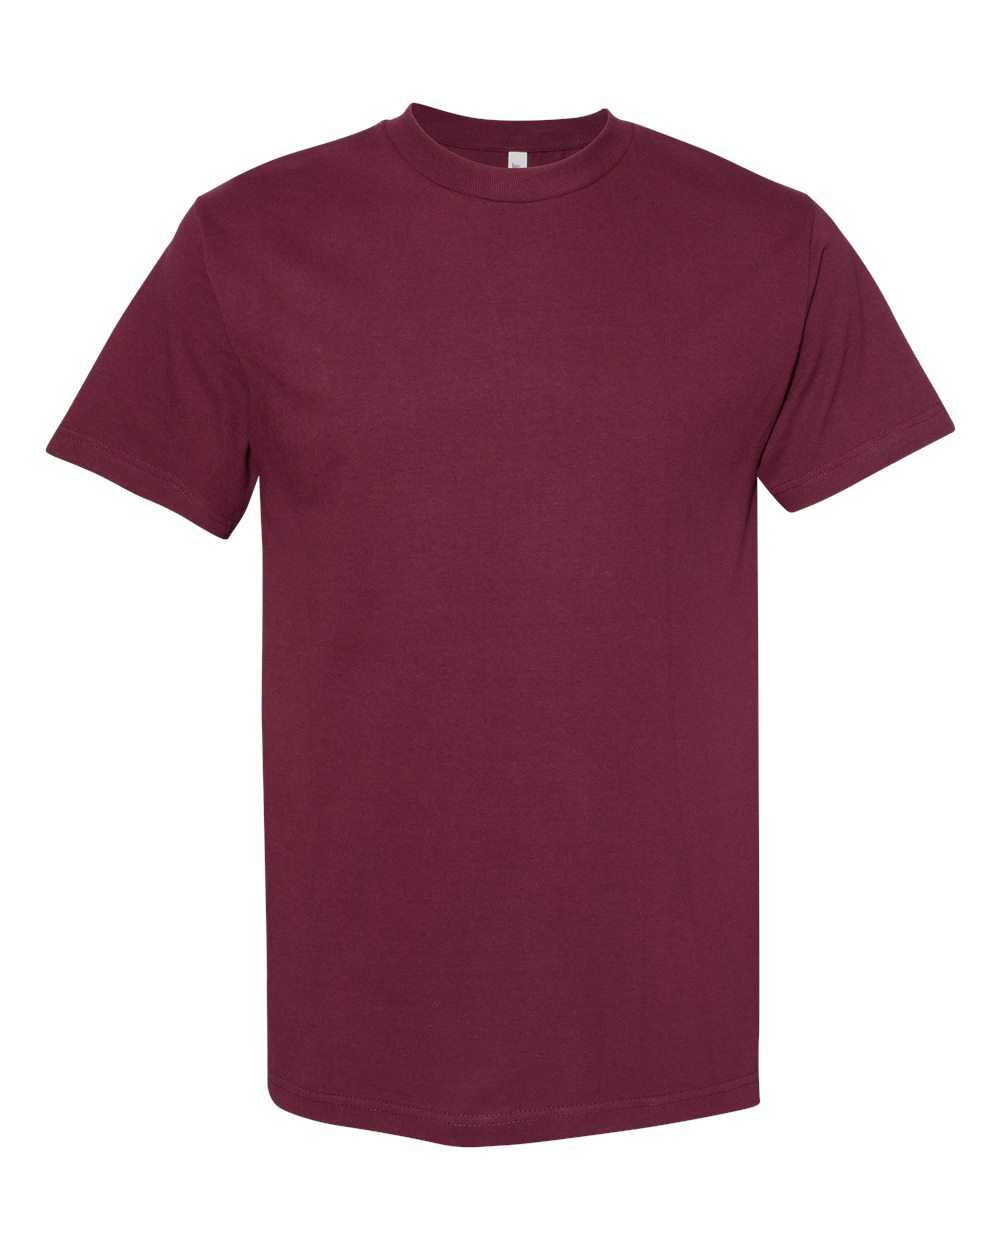 American Apparel 1301 Unisex Heavyweight Cotton T-Shirt - Burgundy - HIT a Double